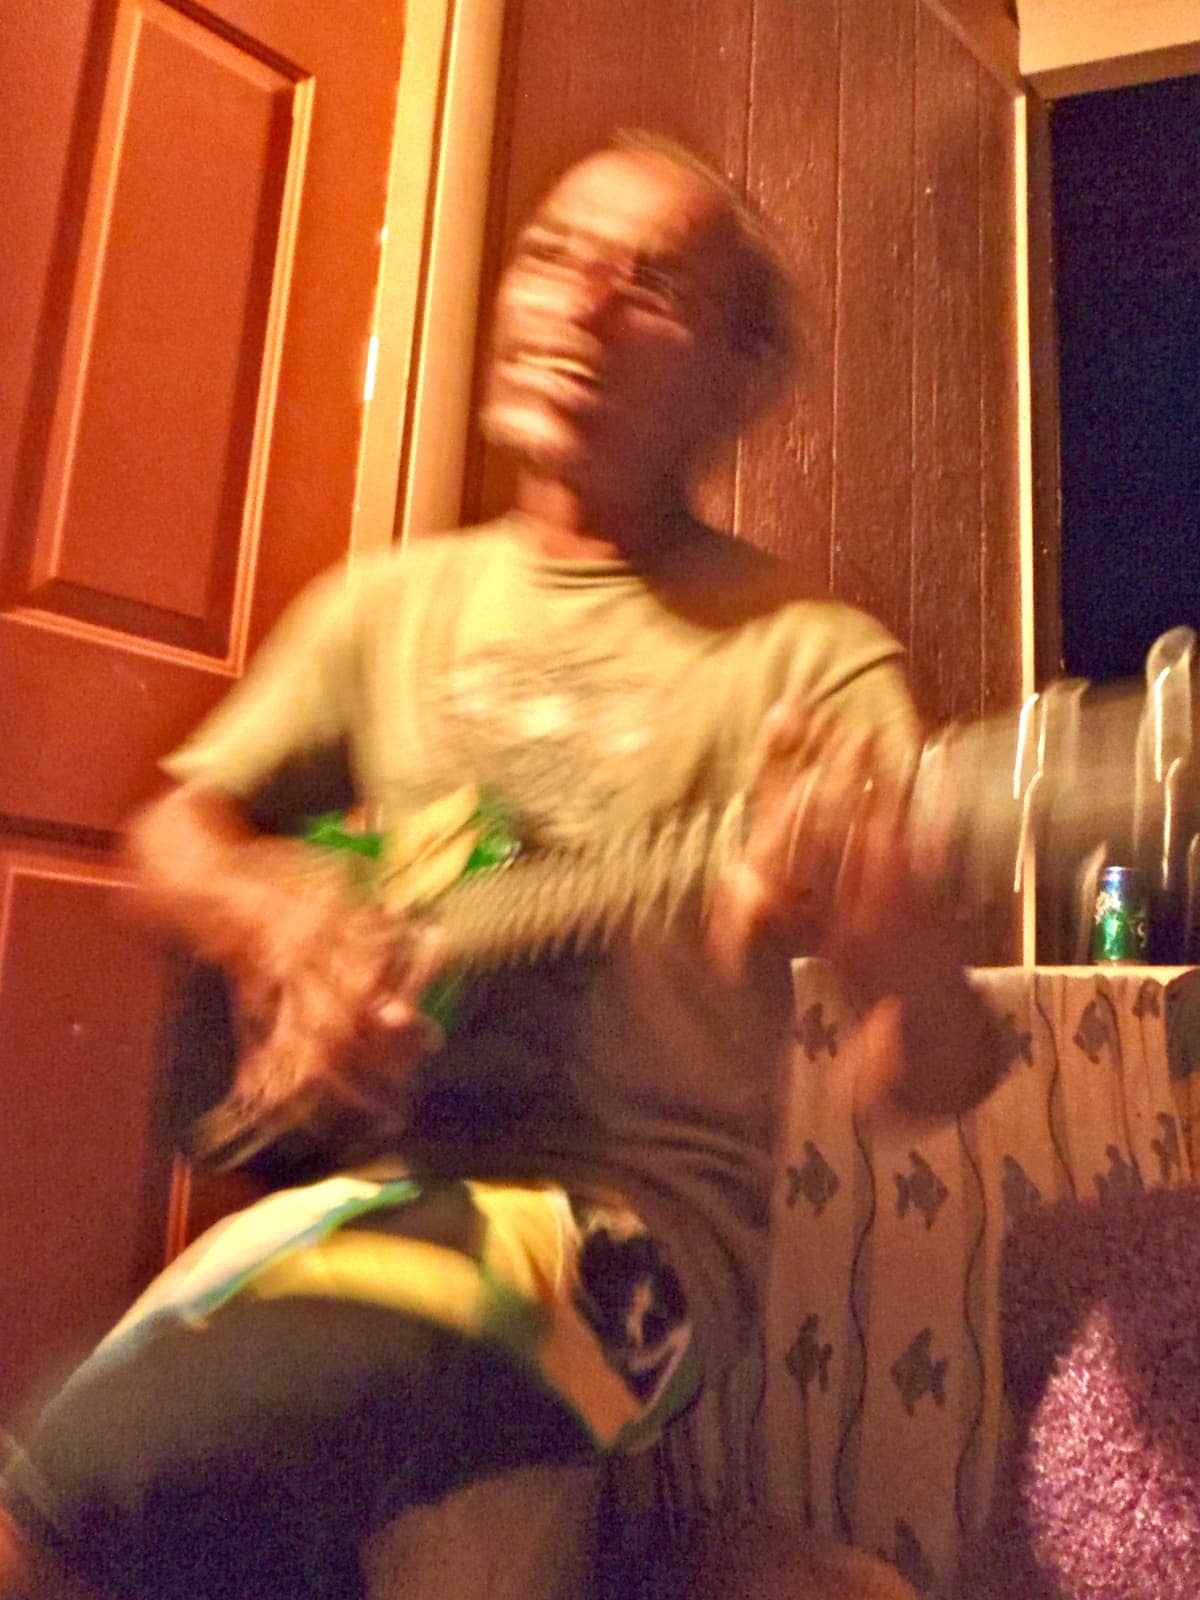 Blurry image of man playing guitar